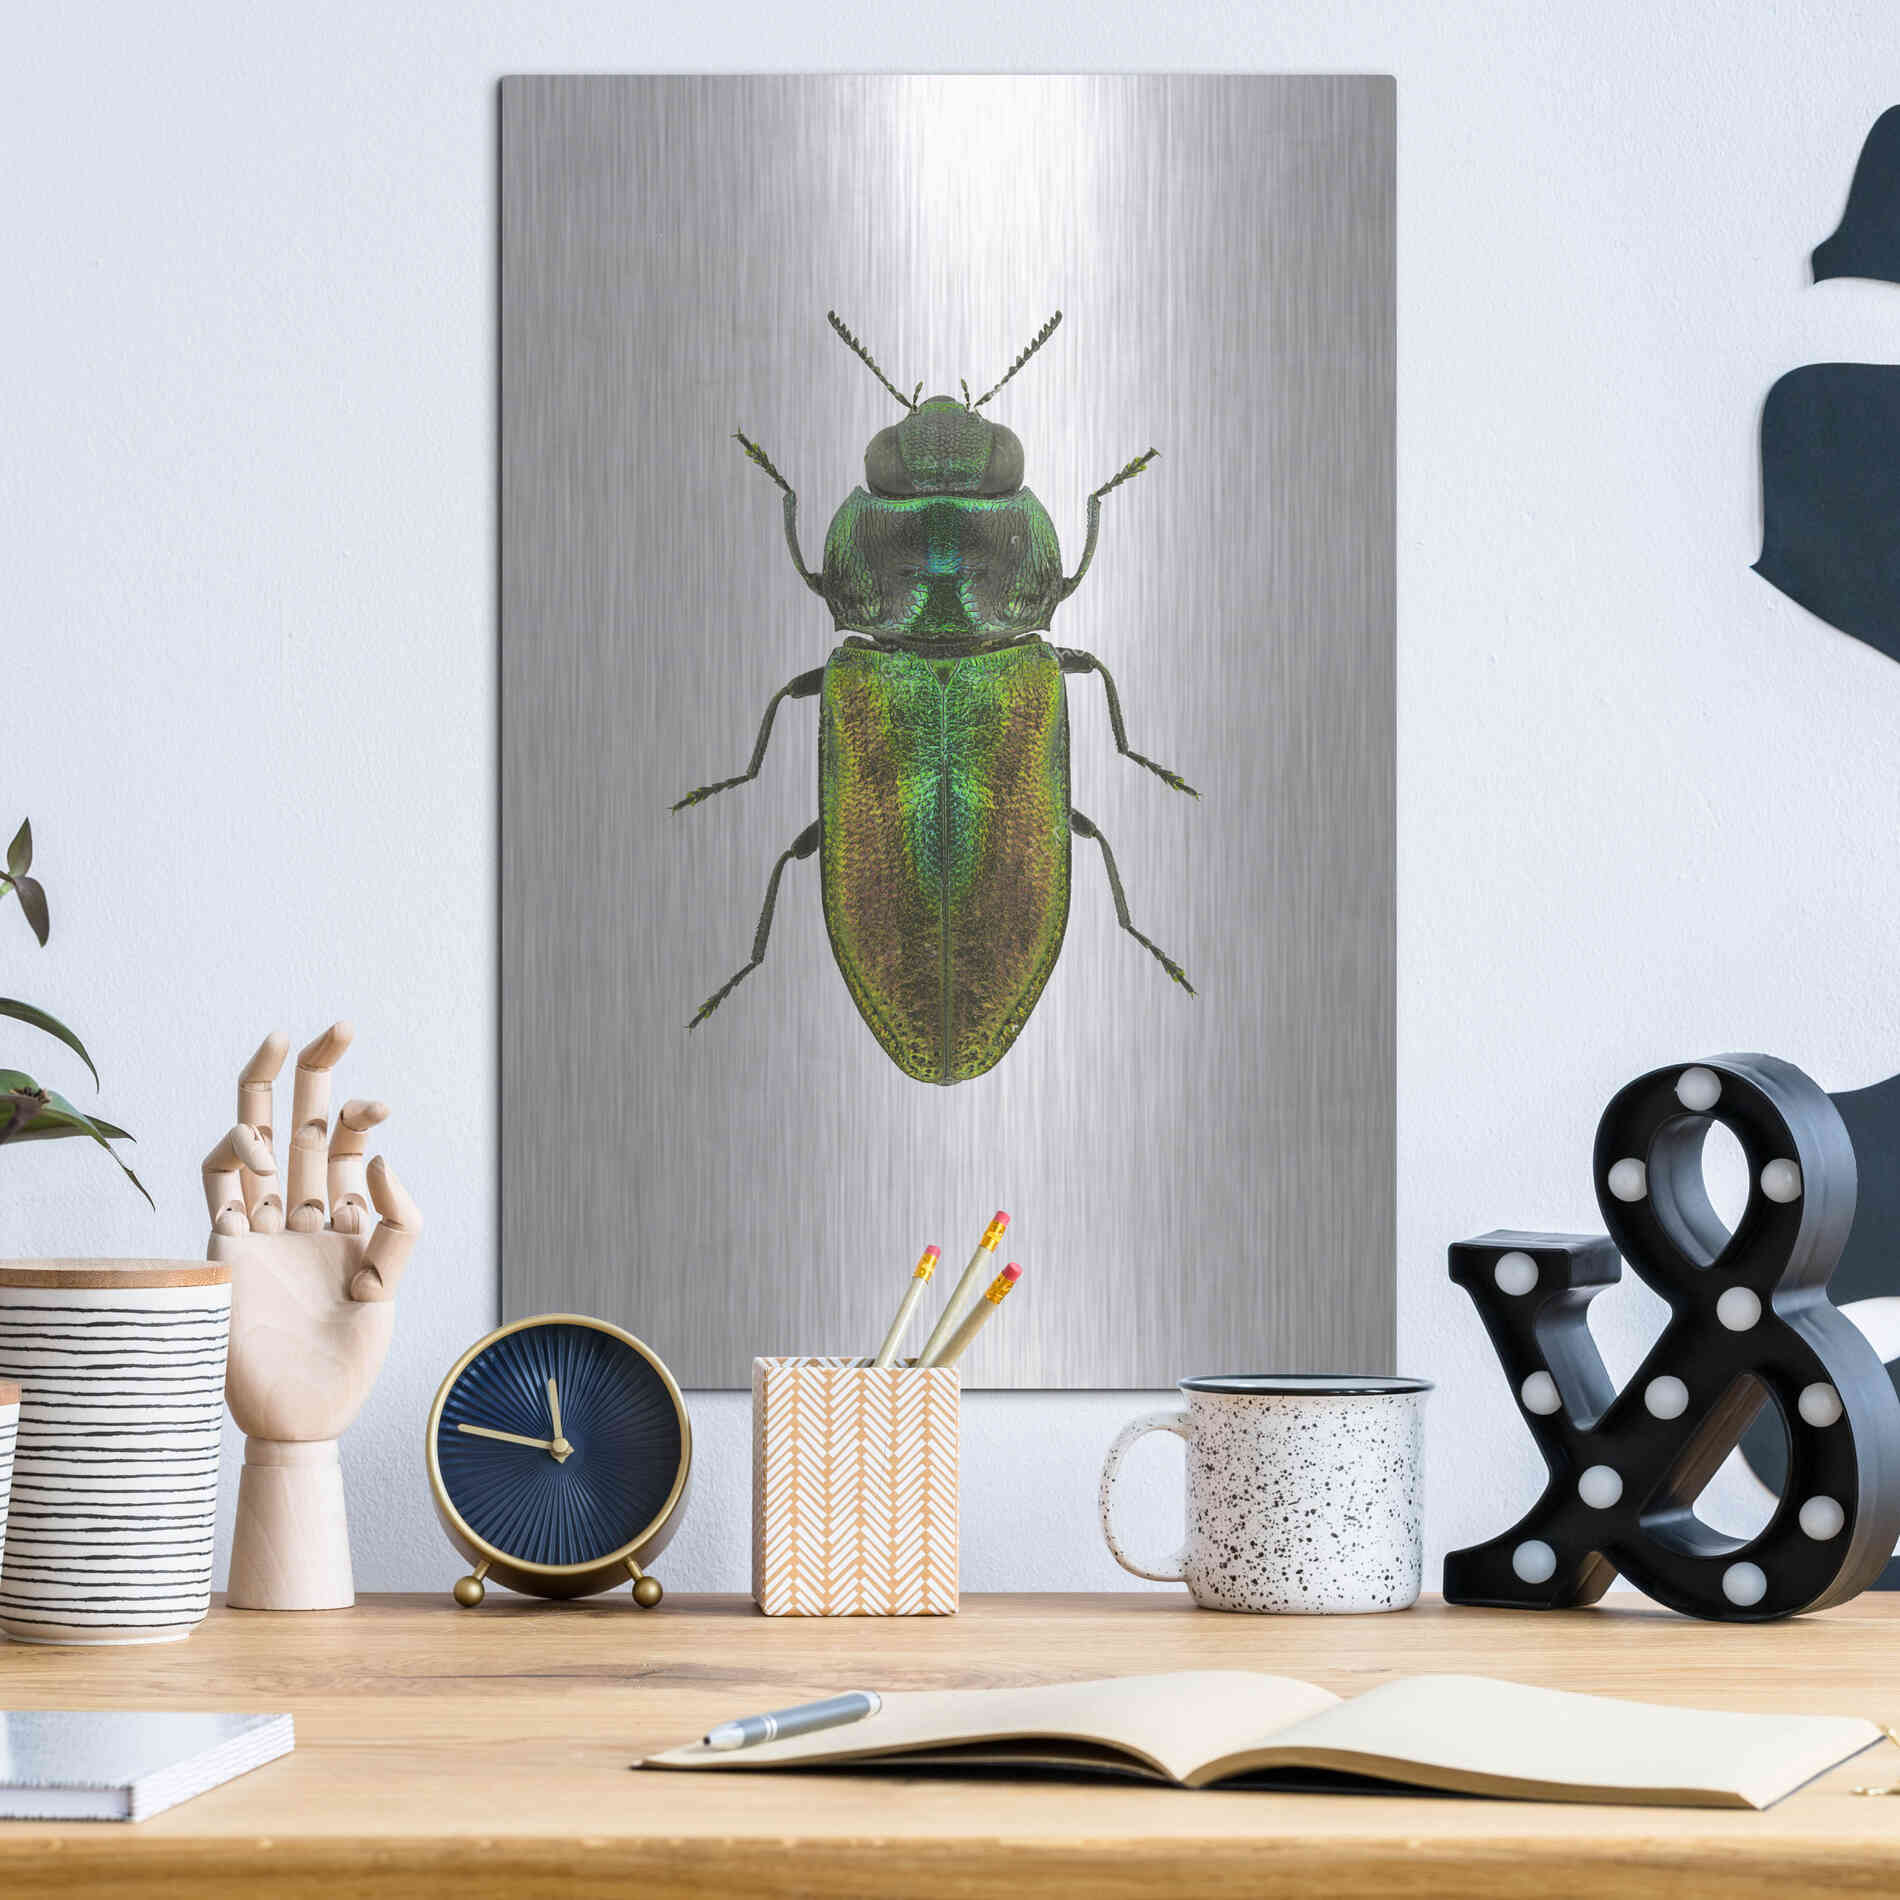 Luxe Metal Art 'Beetle 1' by Design Fabrikken, Metal Wall Art,12x16